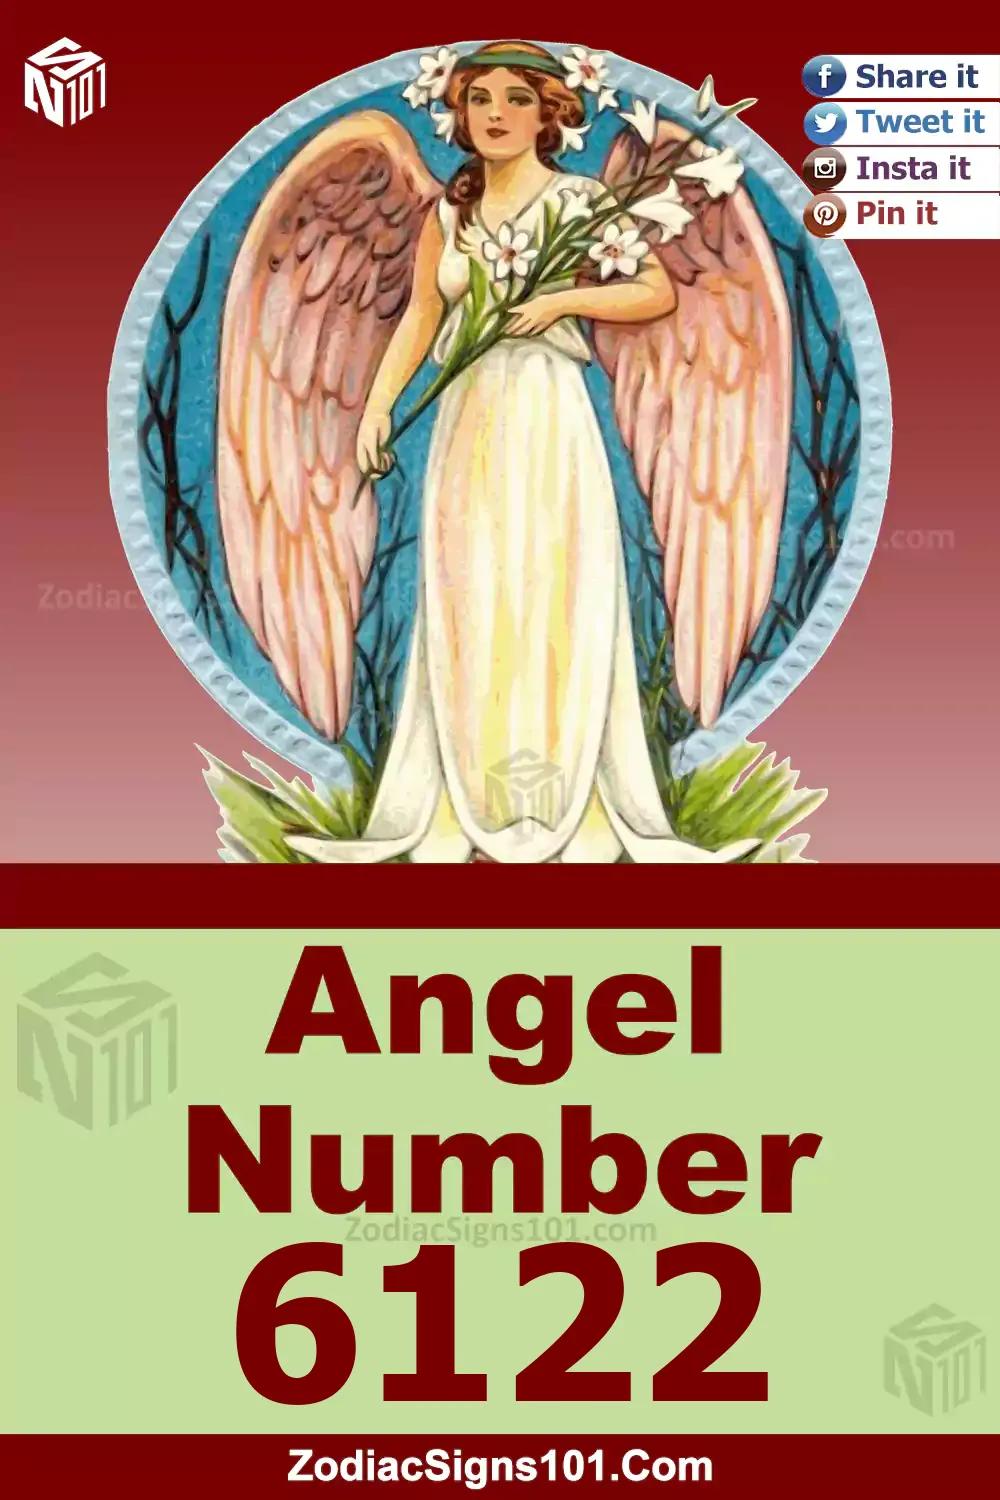 6122-Angel-Number-Meaning.jpg